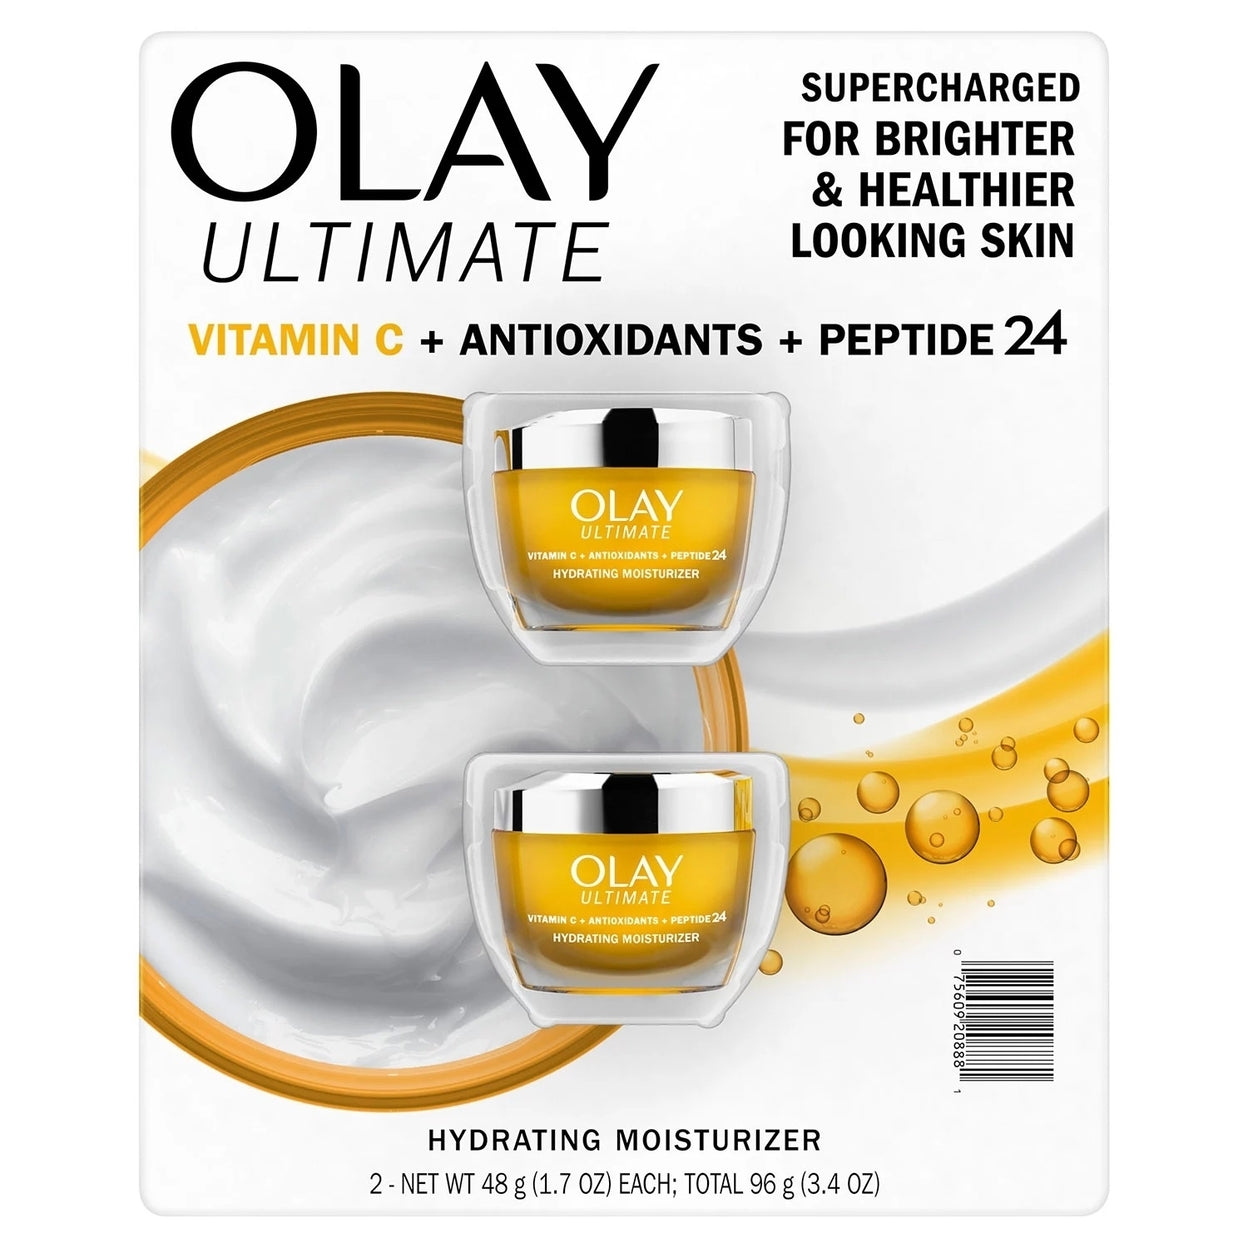 Olay Ultimate Vitamin C + Antioxidants + Peptide 24 Hydrating Moisturizer (1.7 oz., 2 pk.)